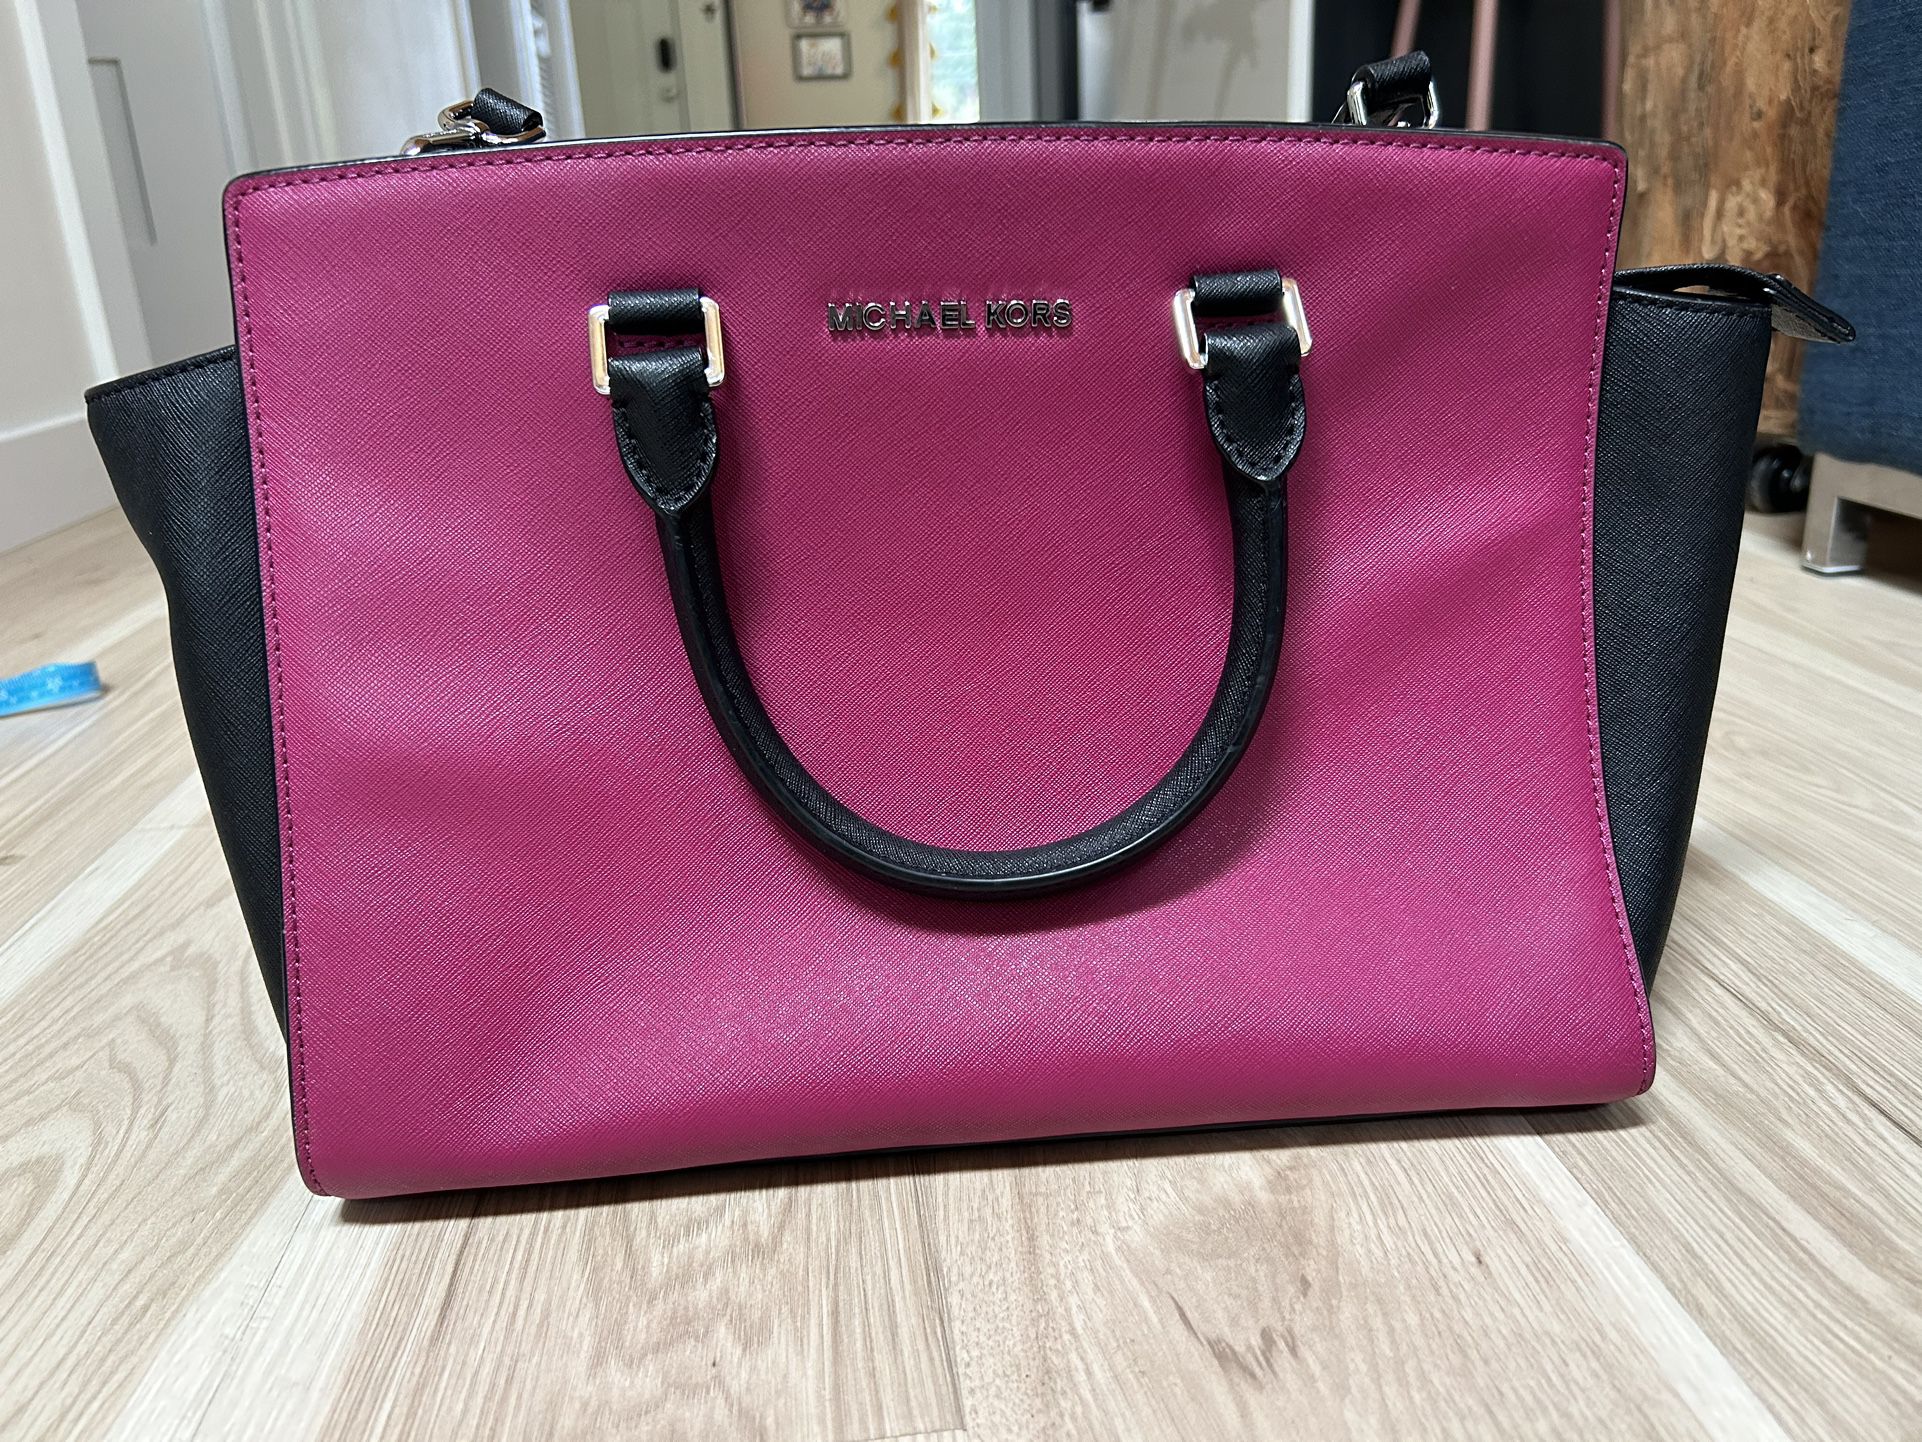 Michael Kors Selma Large Colorblock Satchel Pink Leather Handbag